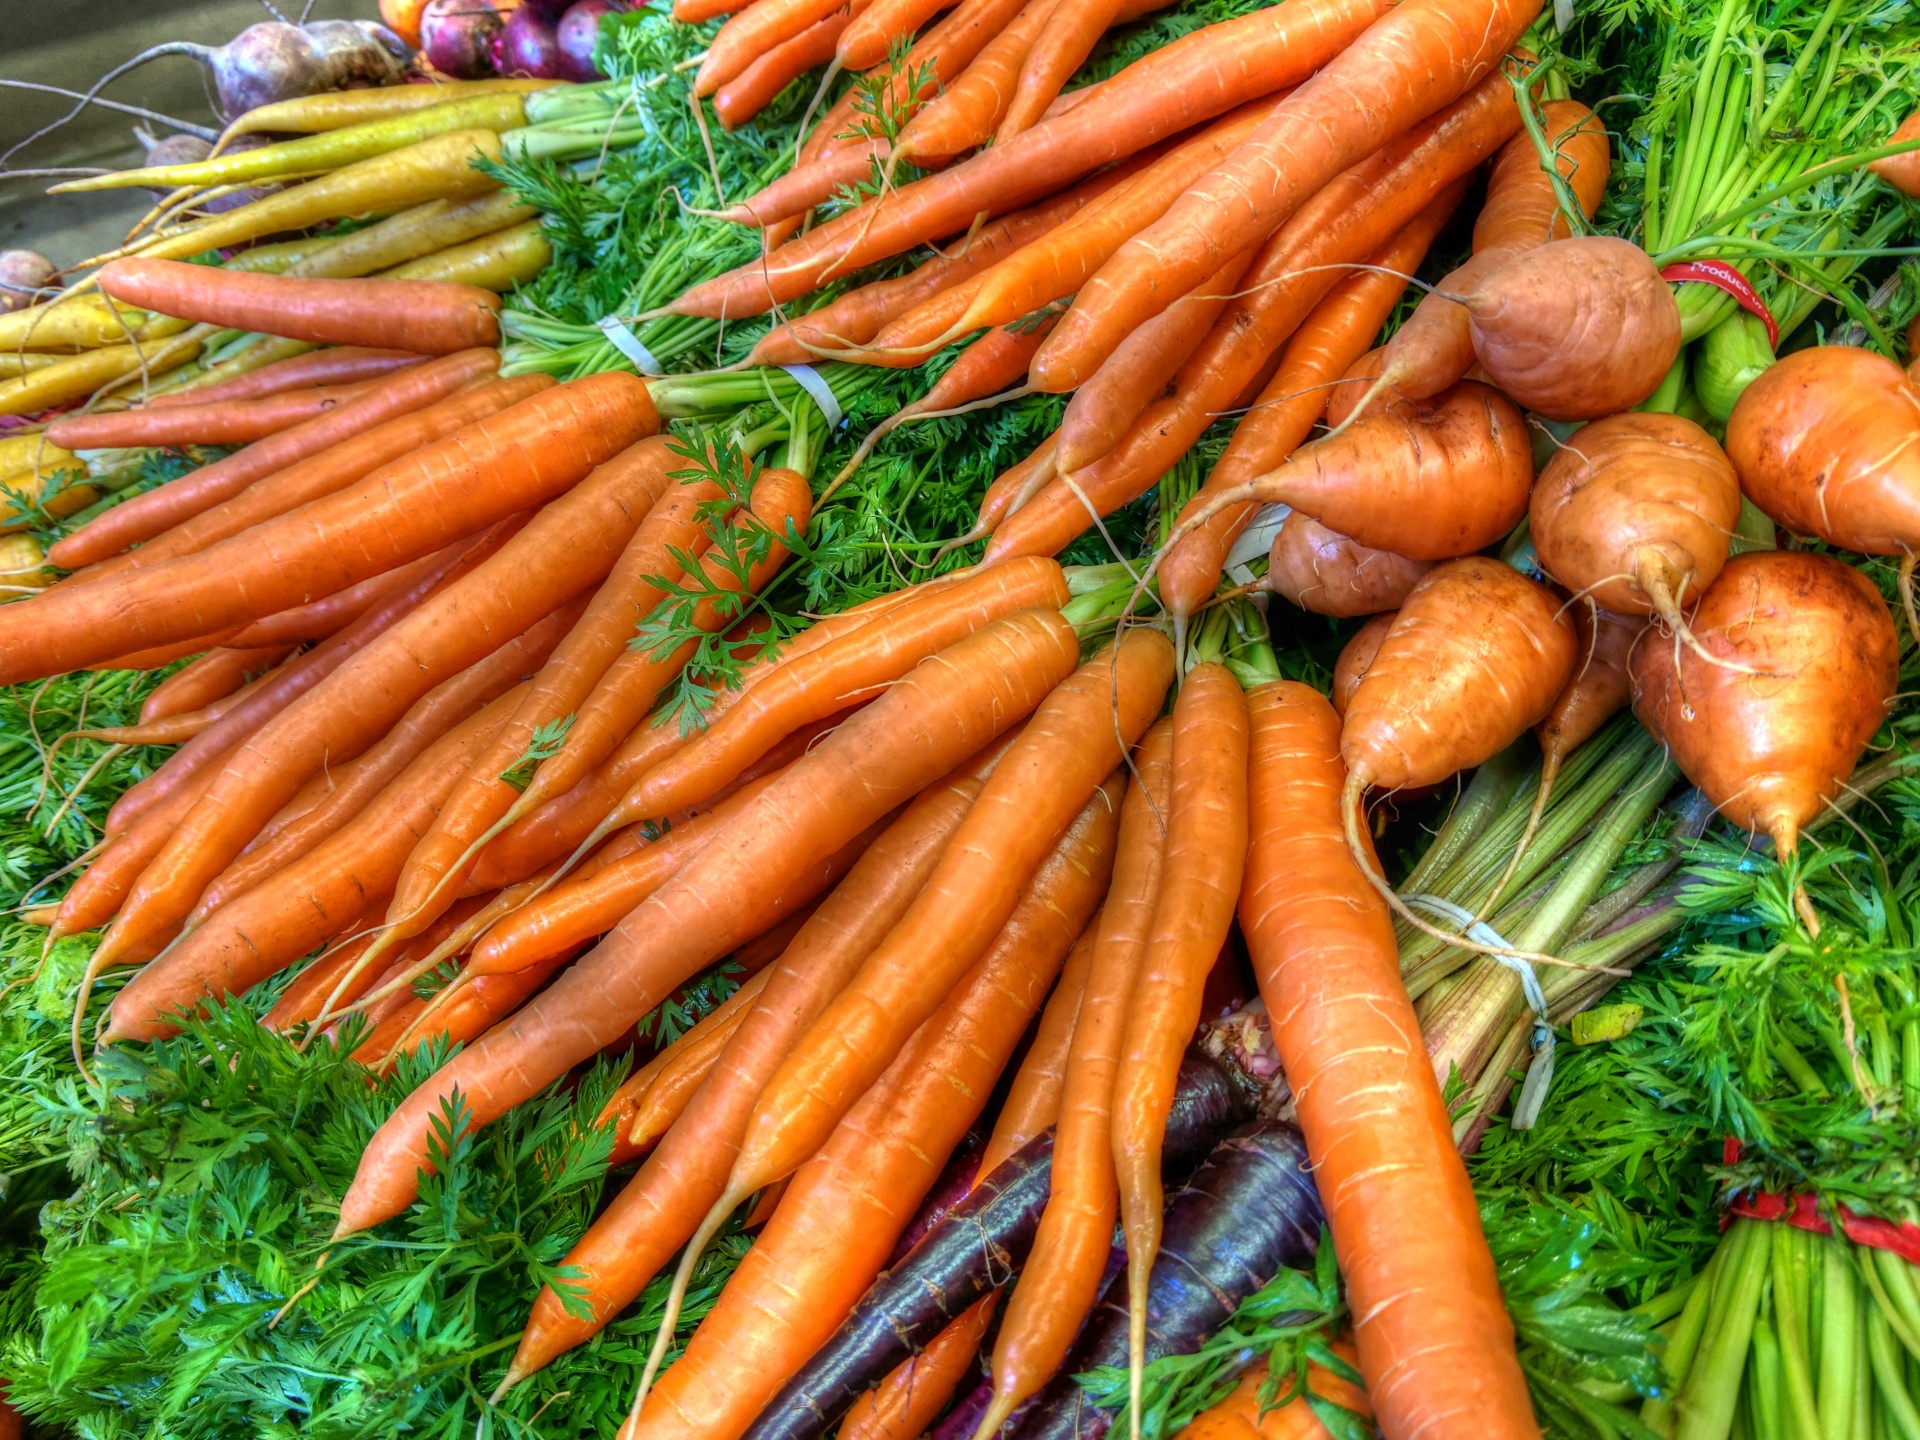 Download free photo of Carrot,kaloti,vegetable,vegan,health - from needpix.com